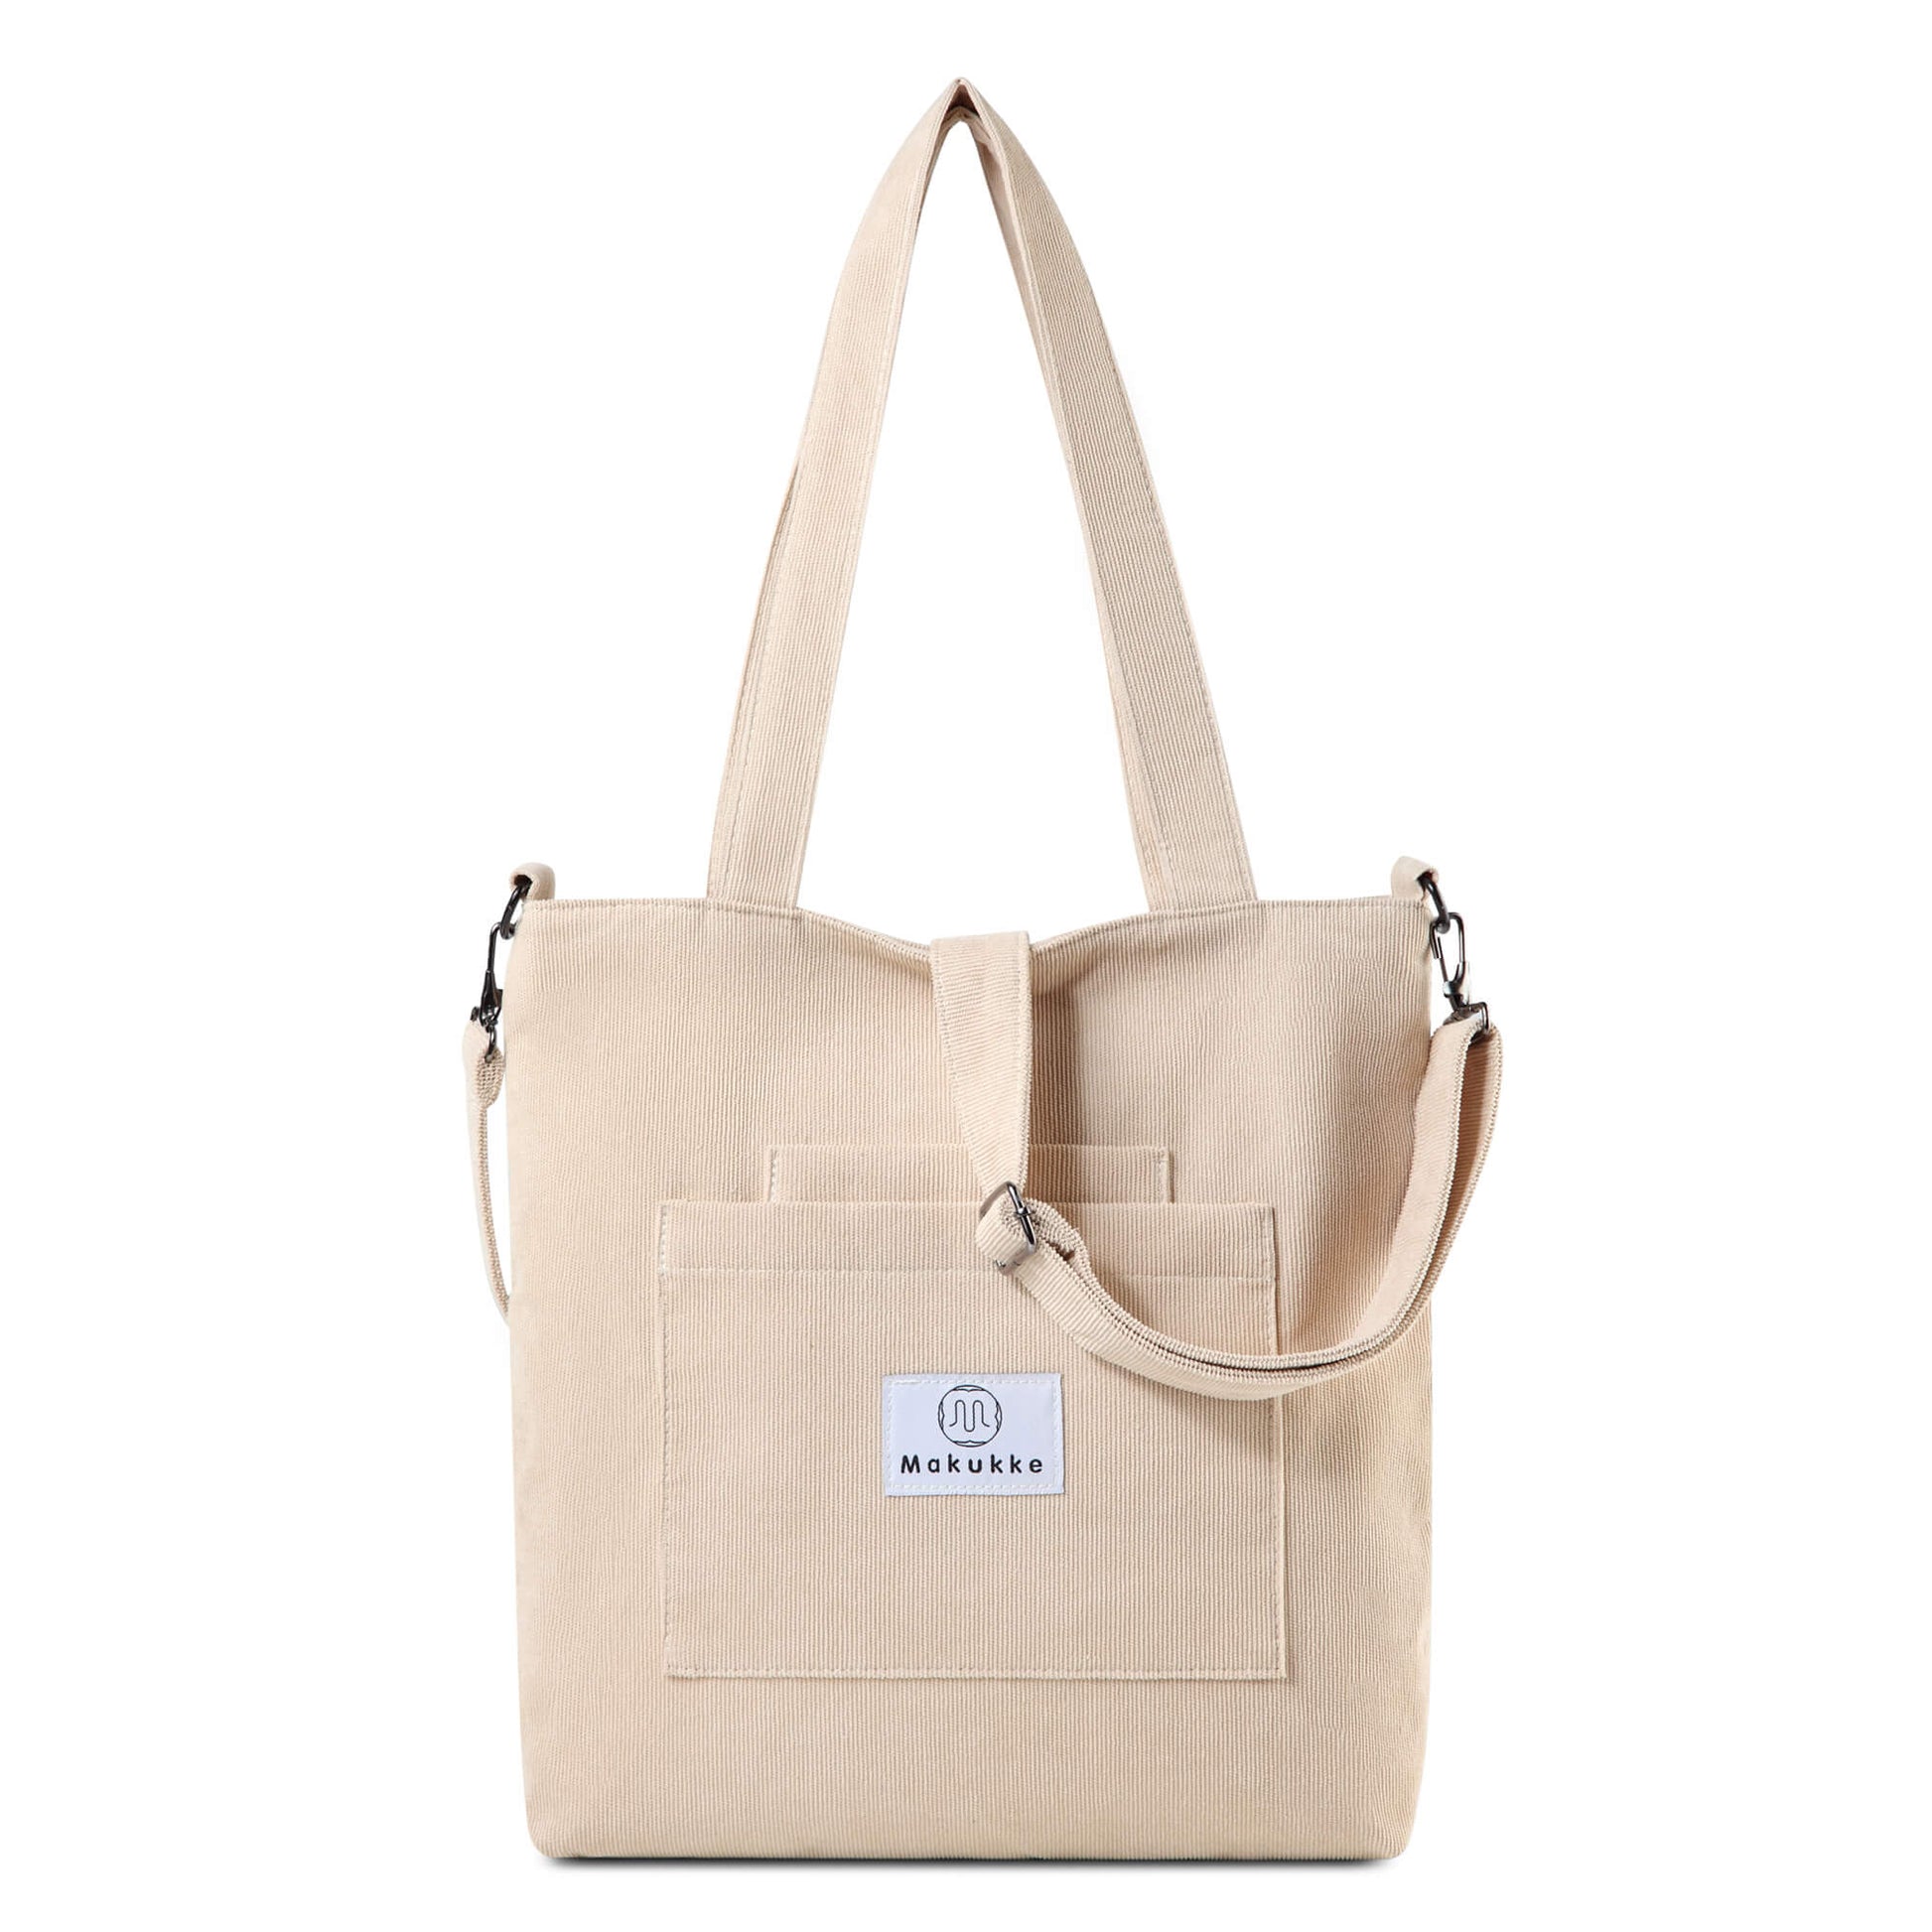 Makukke Tote Bag Women Large Crossbody Bag Stylish Handbag for Women Corduroy Hobo Bag Fashion Shoulder Bag Purse